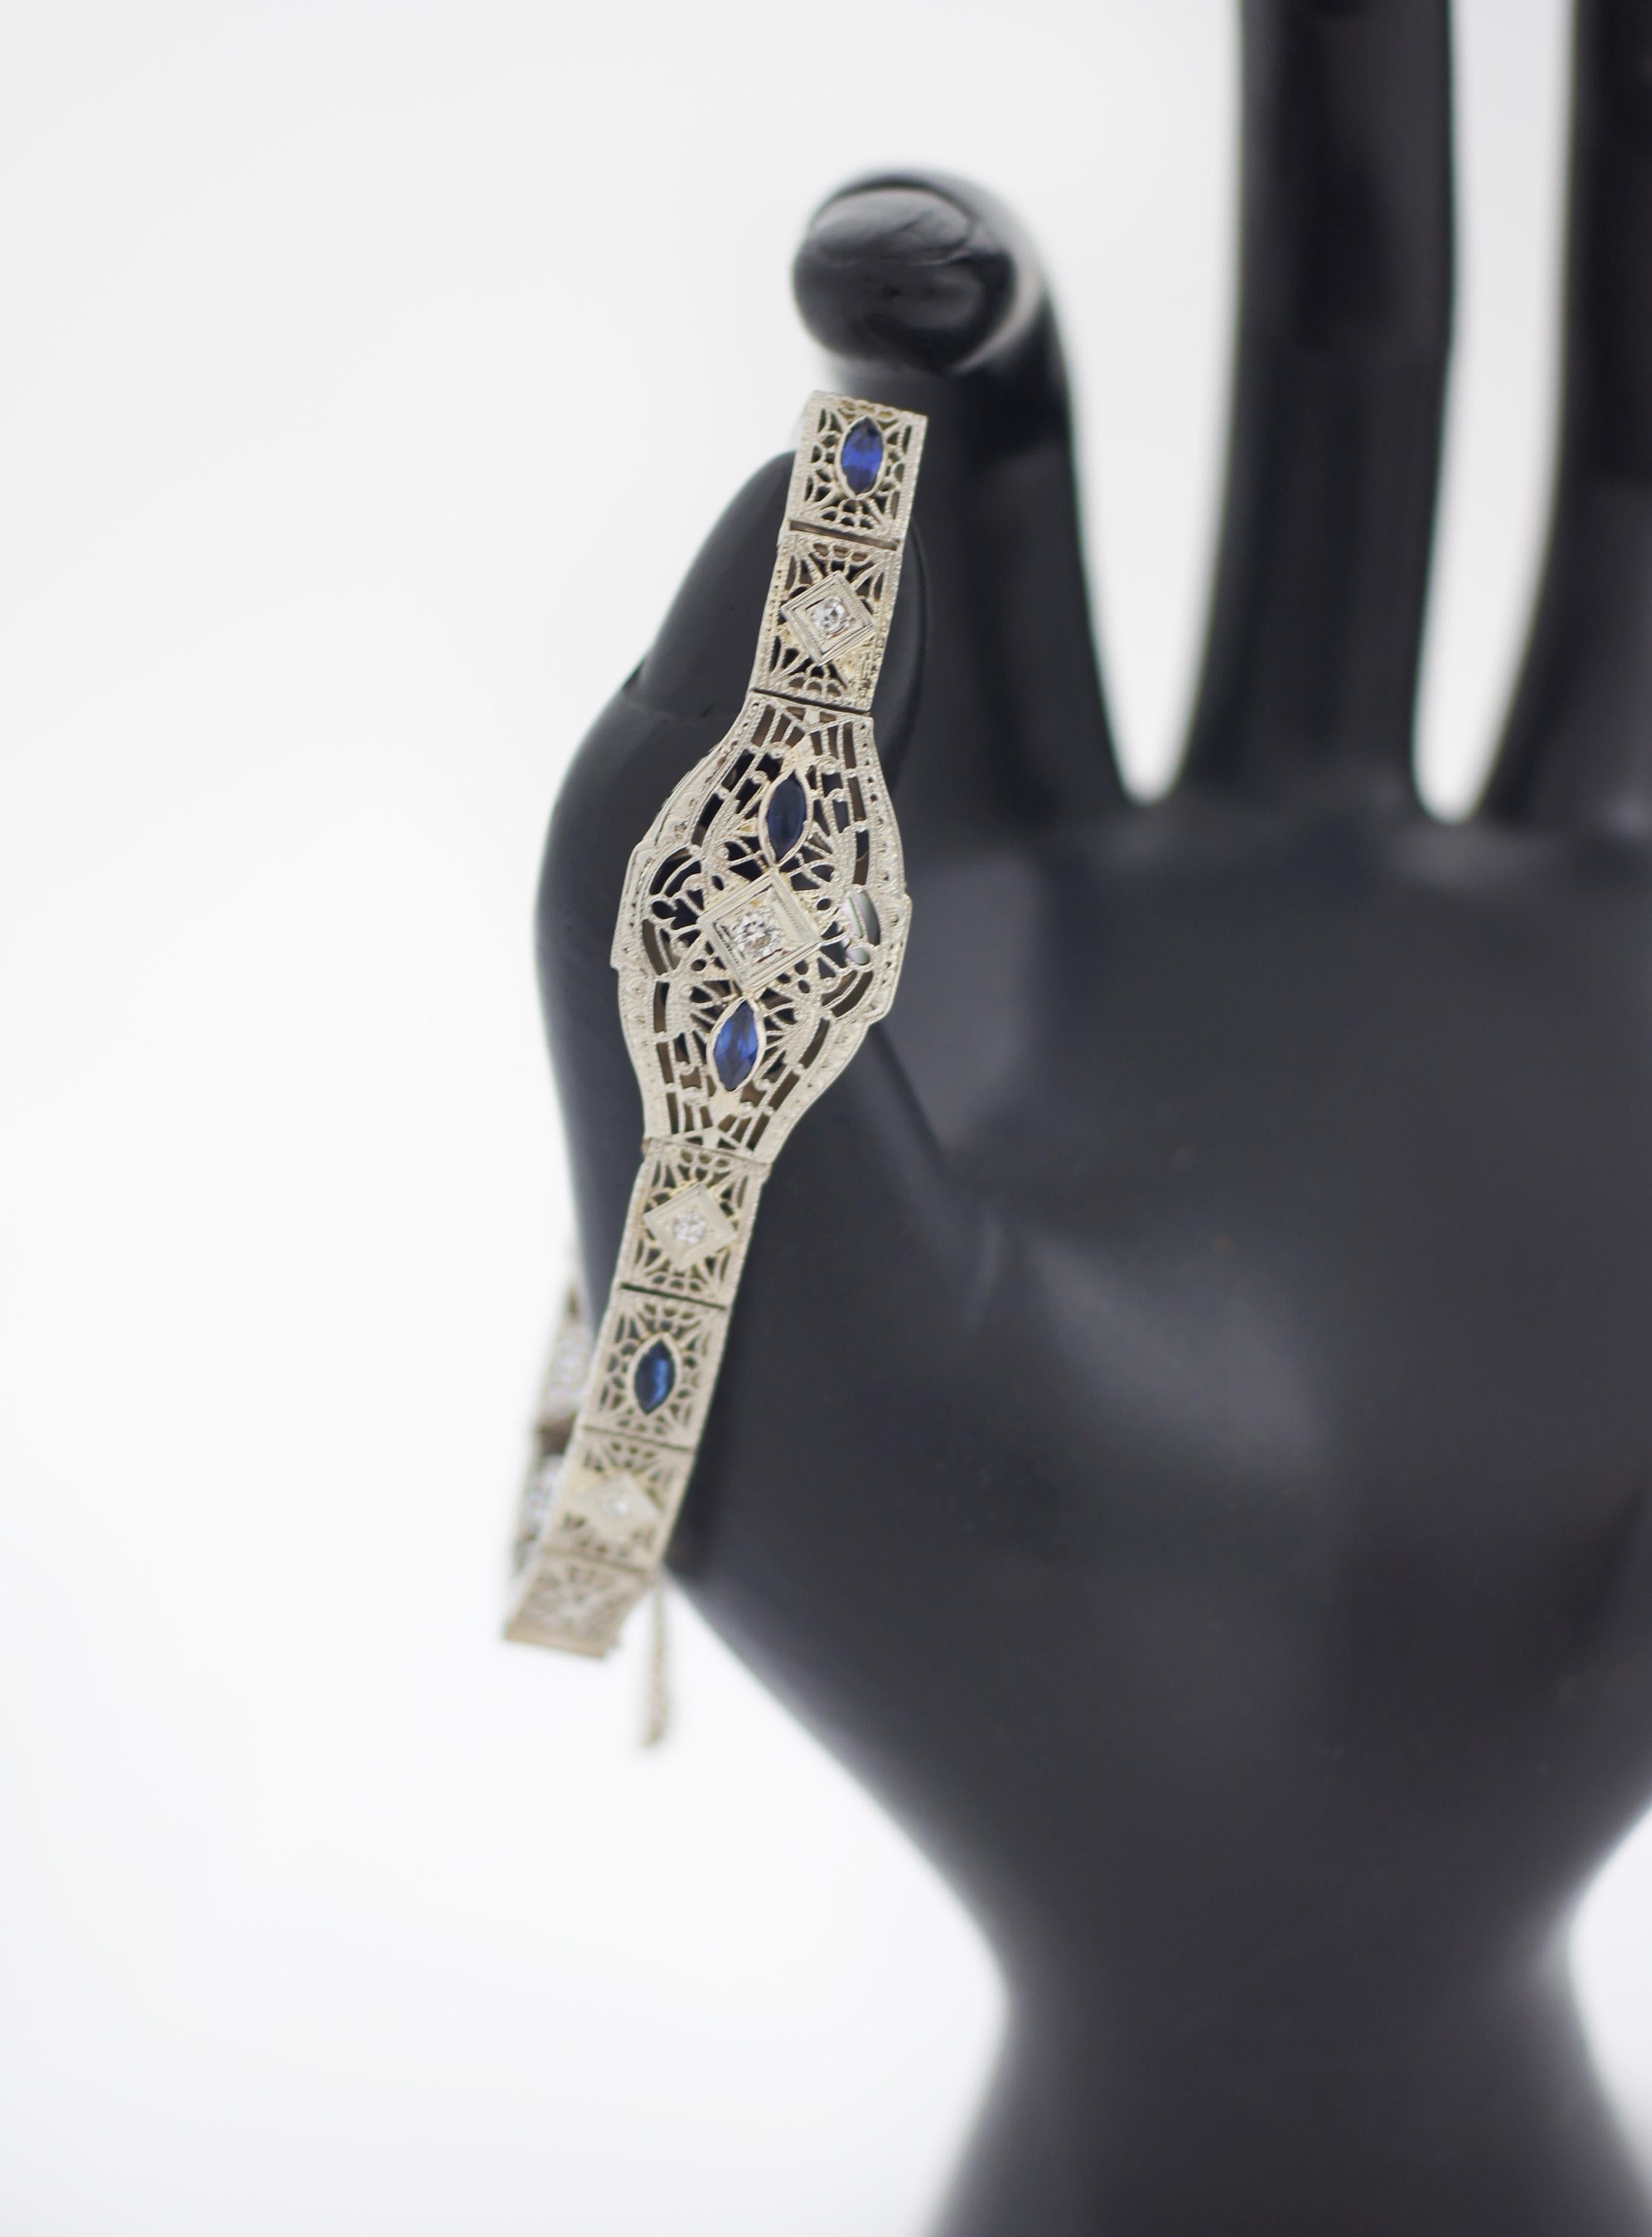 Art Deco
14K White Gold
Diamonds & Sapphires
Filigree Bracelet
Circa 1930's
Hallmarks: 14K
Bracelet length: 6.5